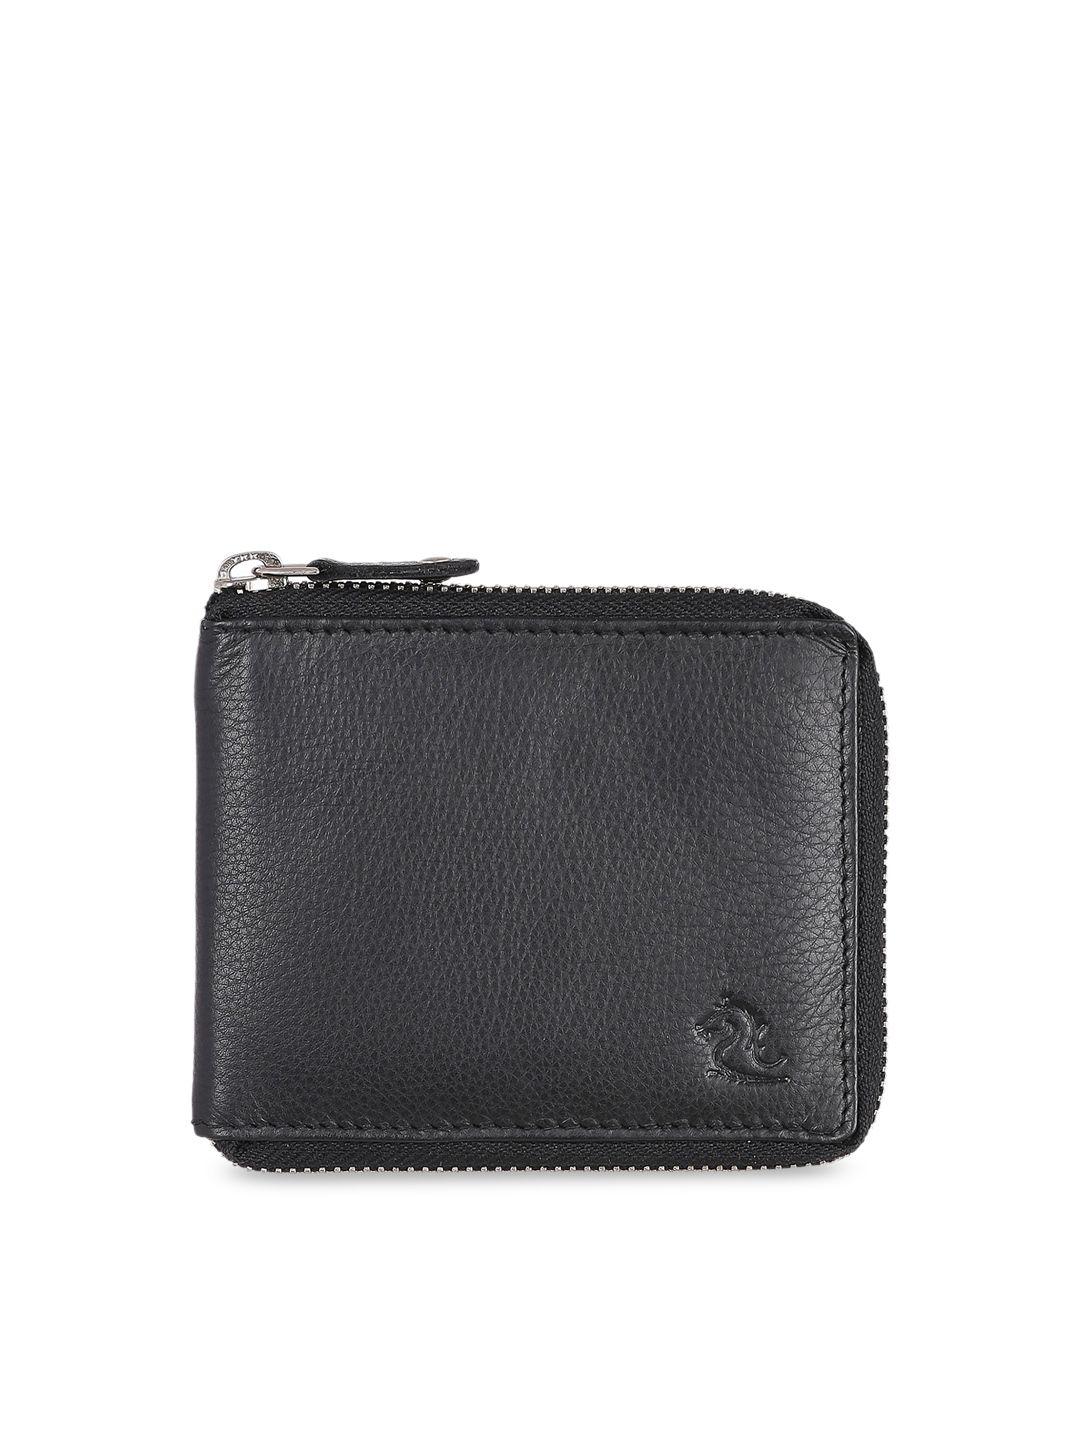 kara men black solid leather zip around wallet